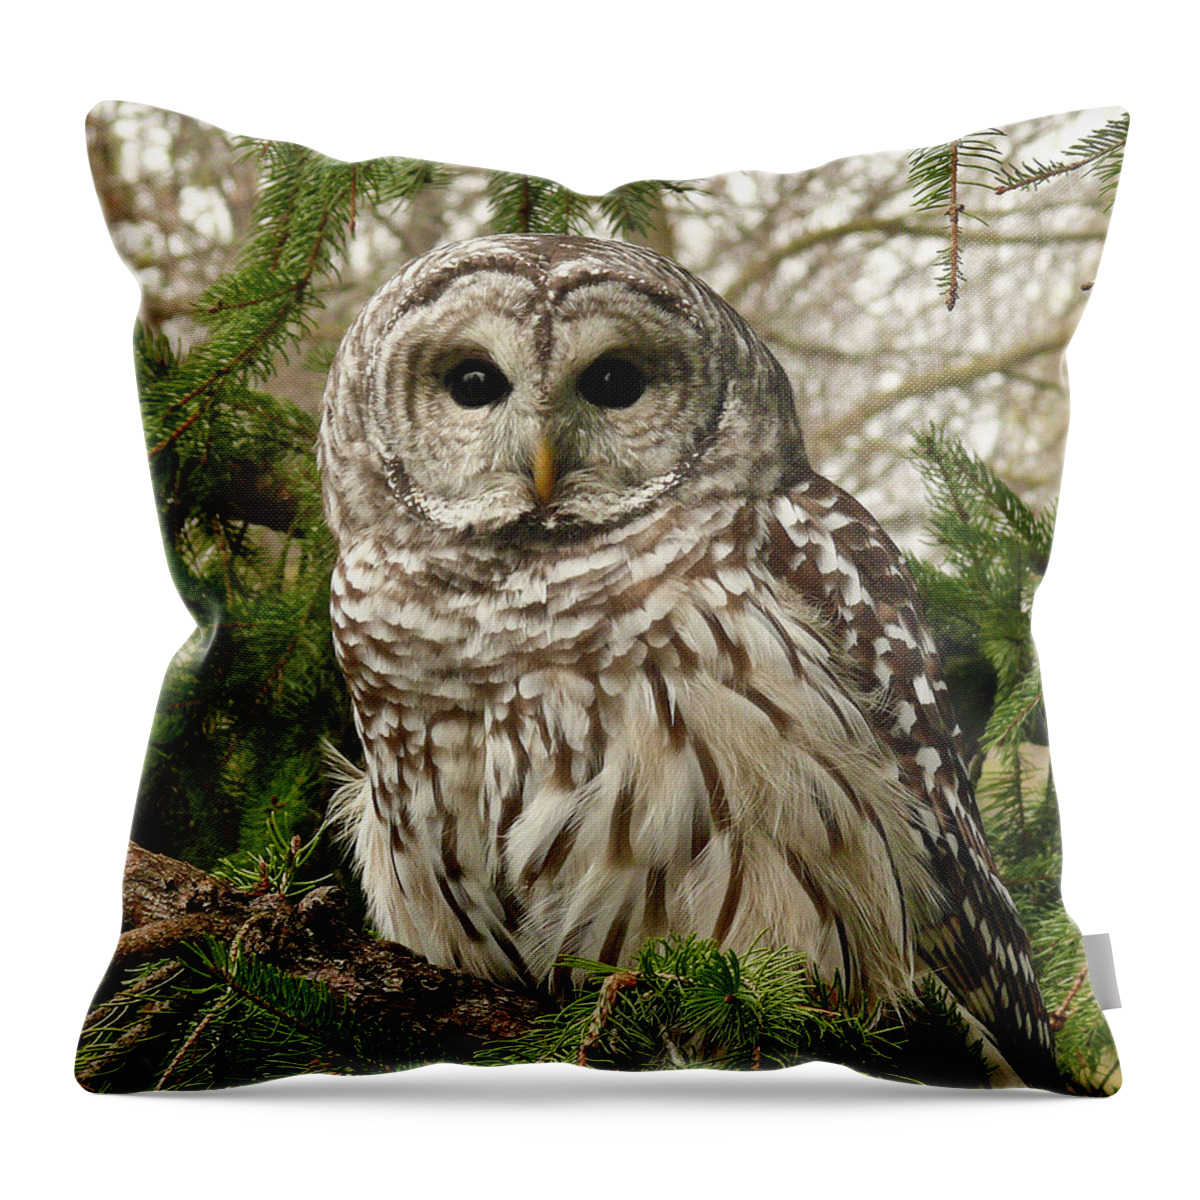 Animal Themes Throw Pillow featuring the photograph Barred Owl by Karen Von Knobloch Photographerkaren